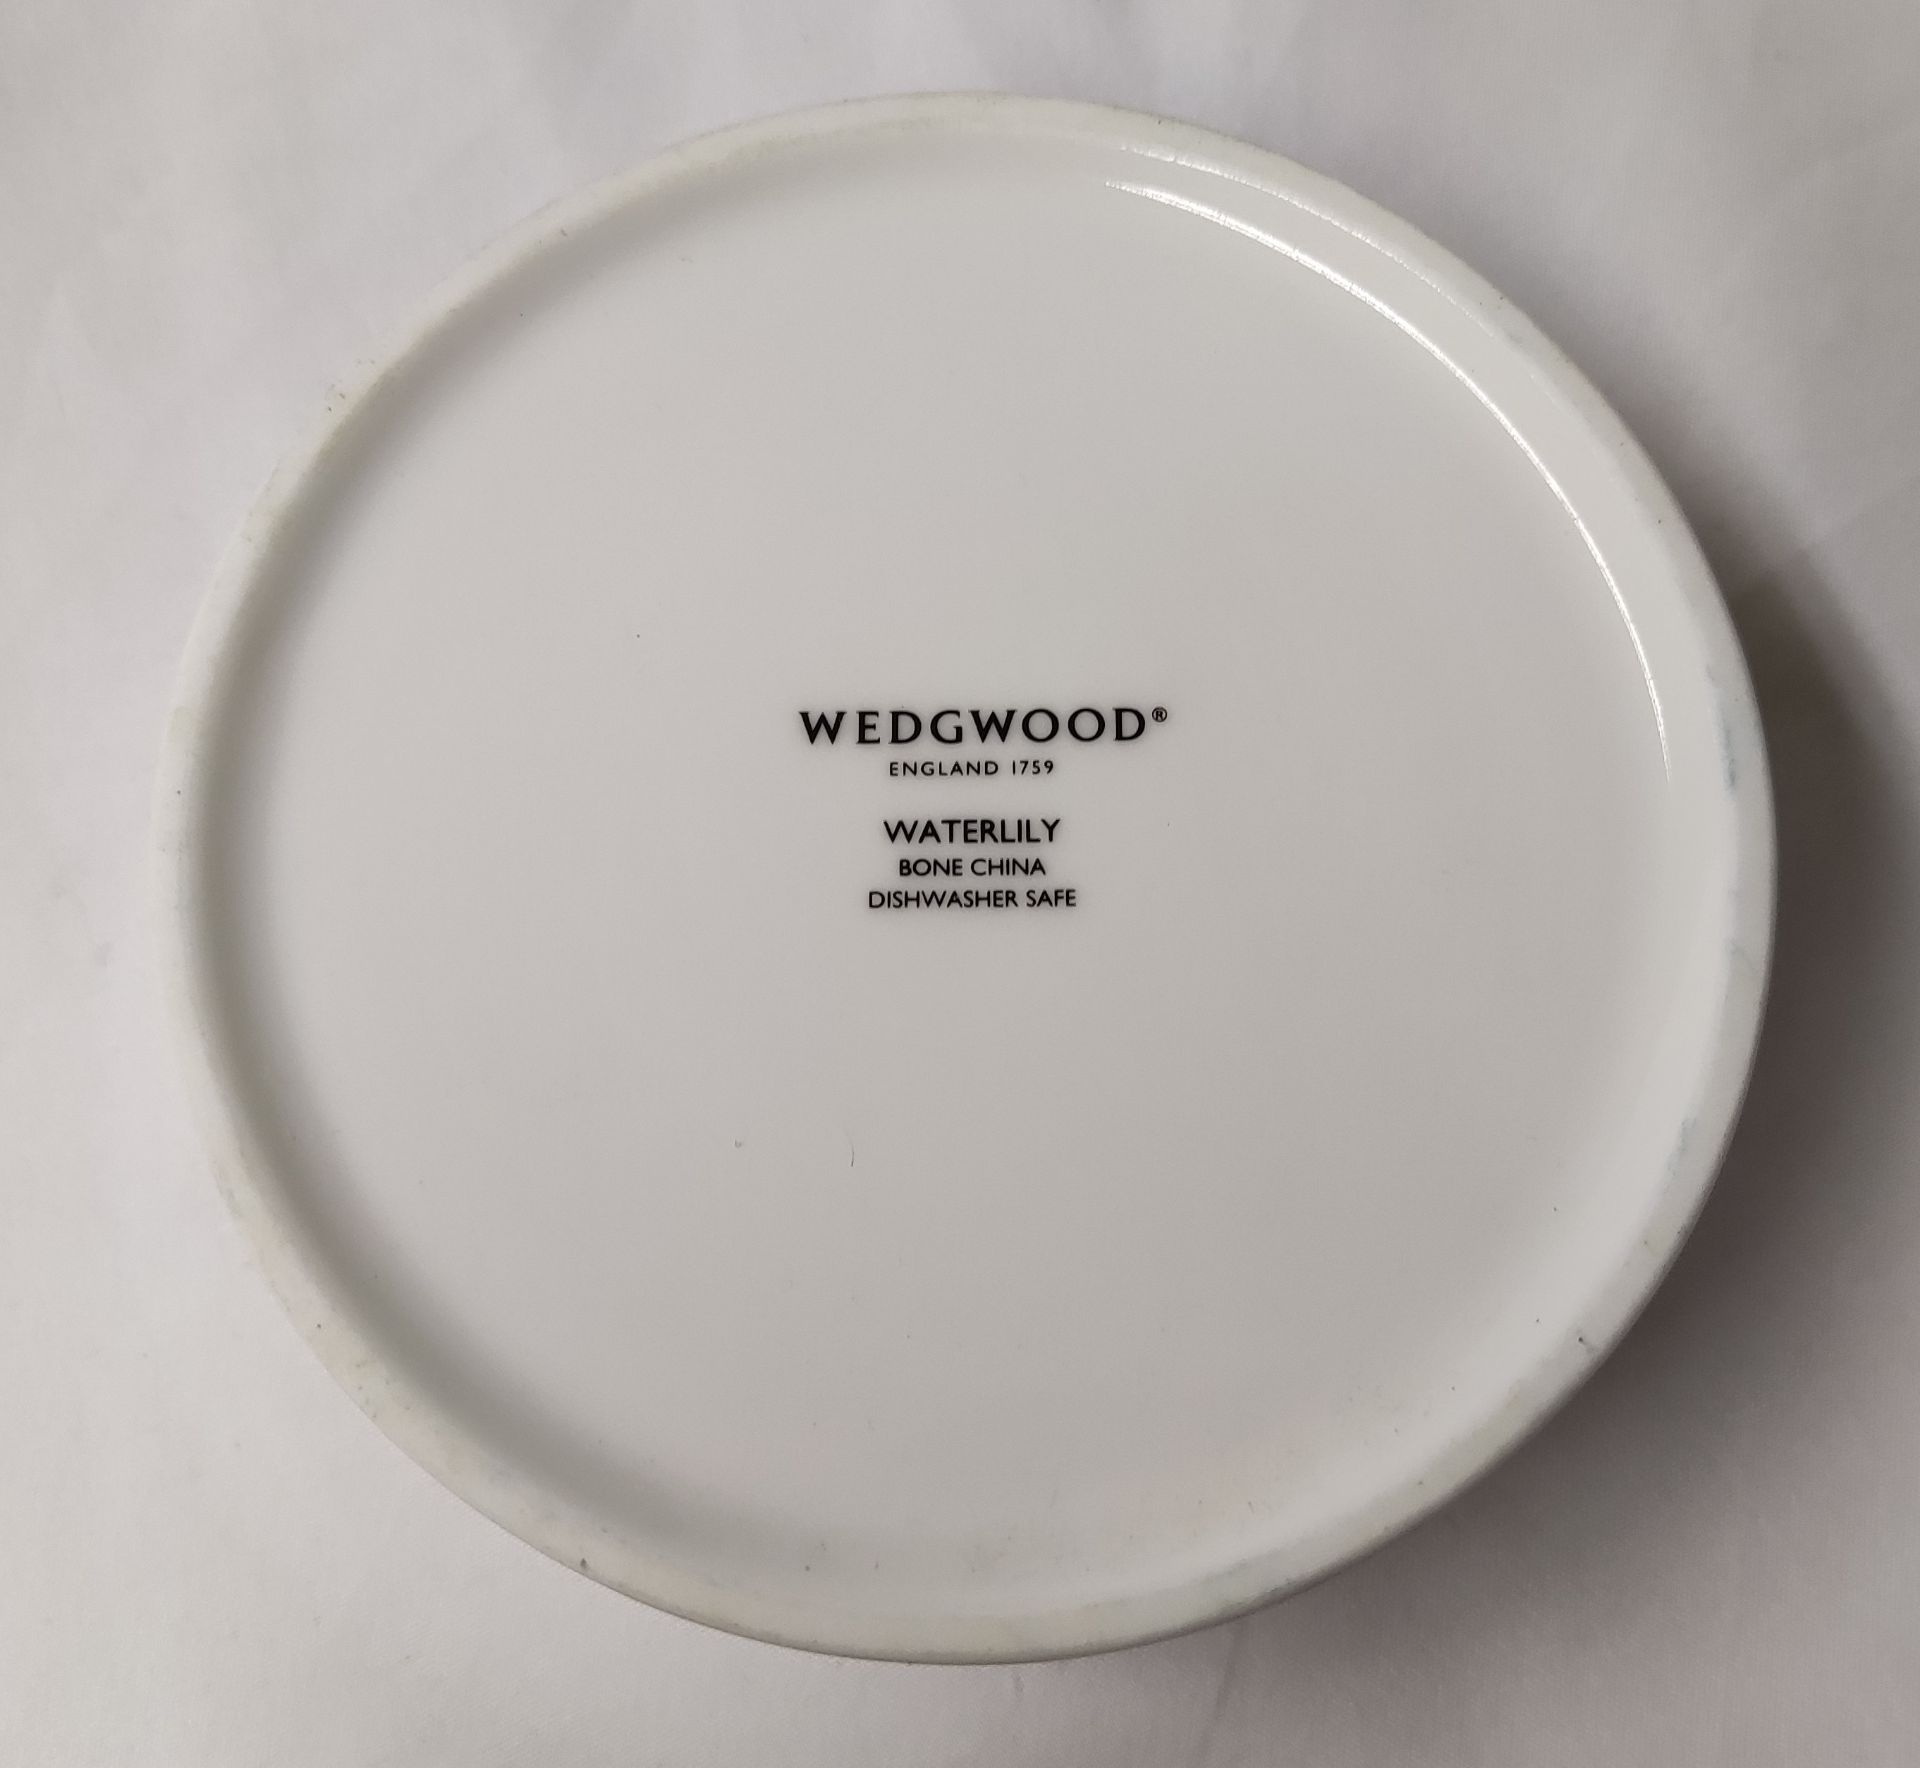 1 x WEDGWOOD Wonderlust Waterlily Fine Bone China Sugar & Creamer Set - New/Boxed - RRP £80 - - Image 9 of 22